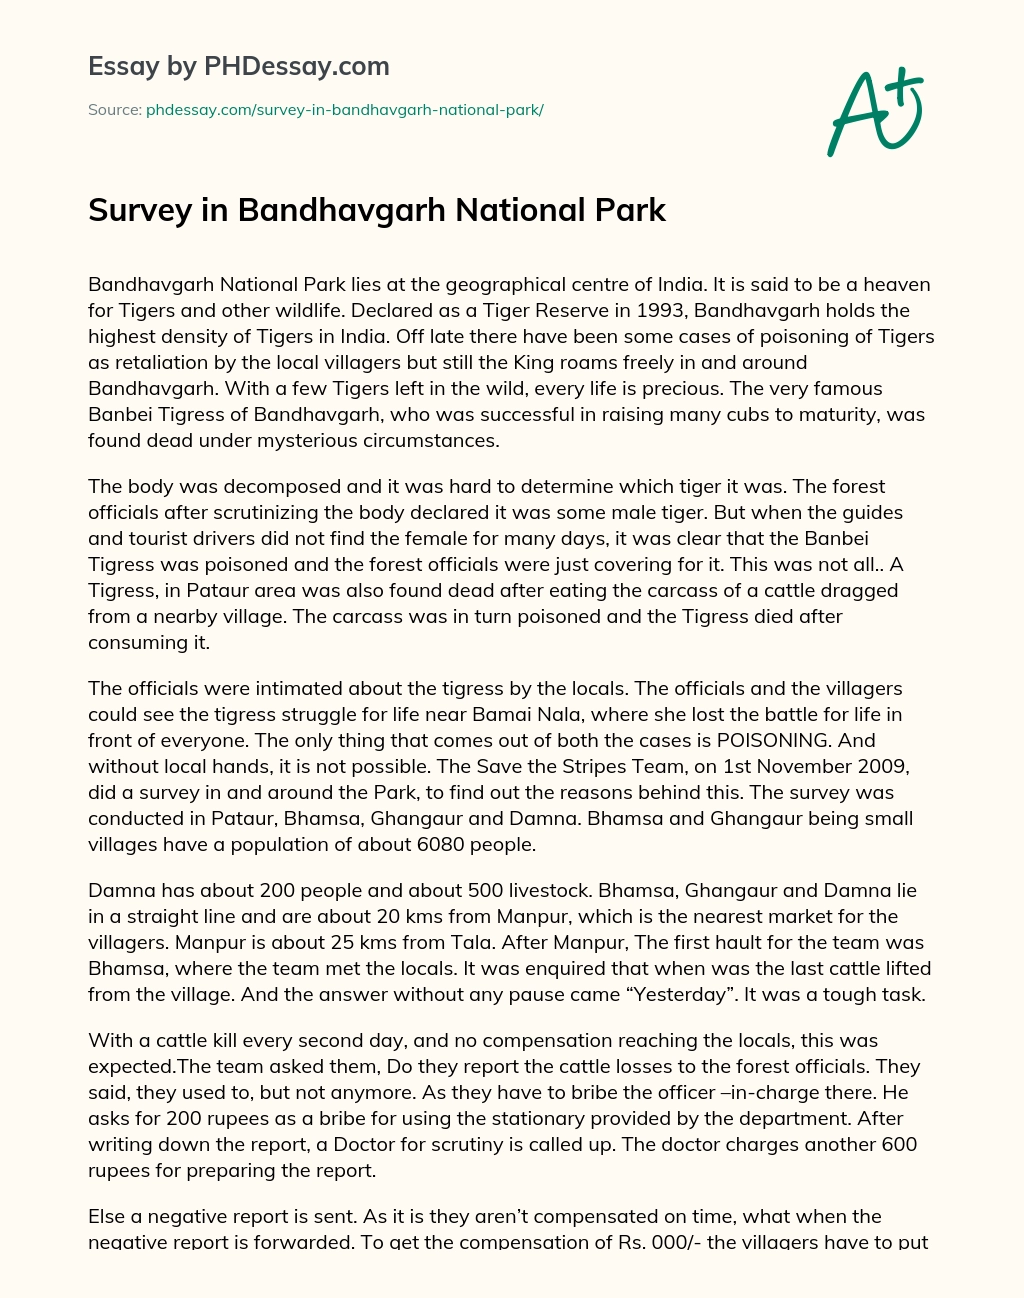 Survey in Bandhavgarh National Park essay